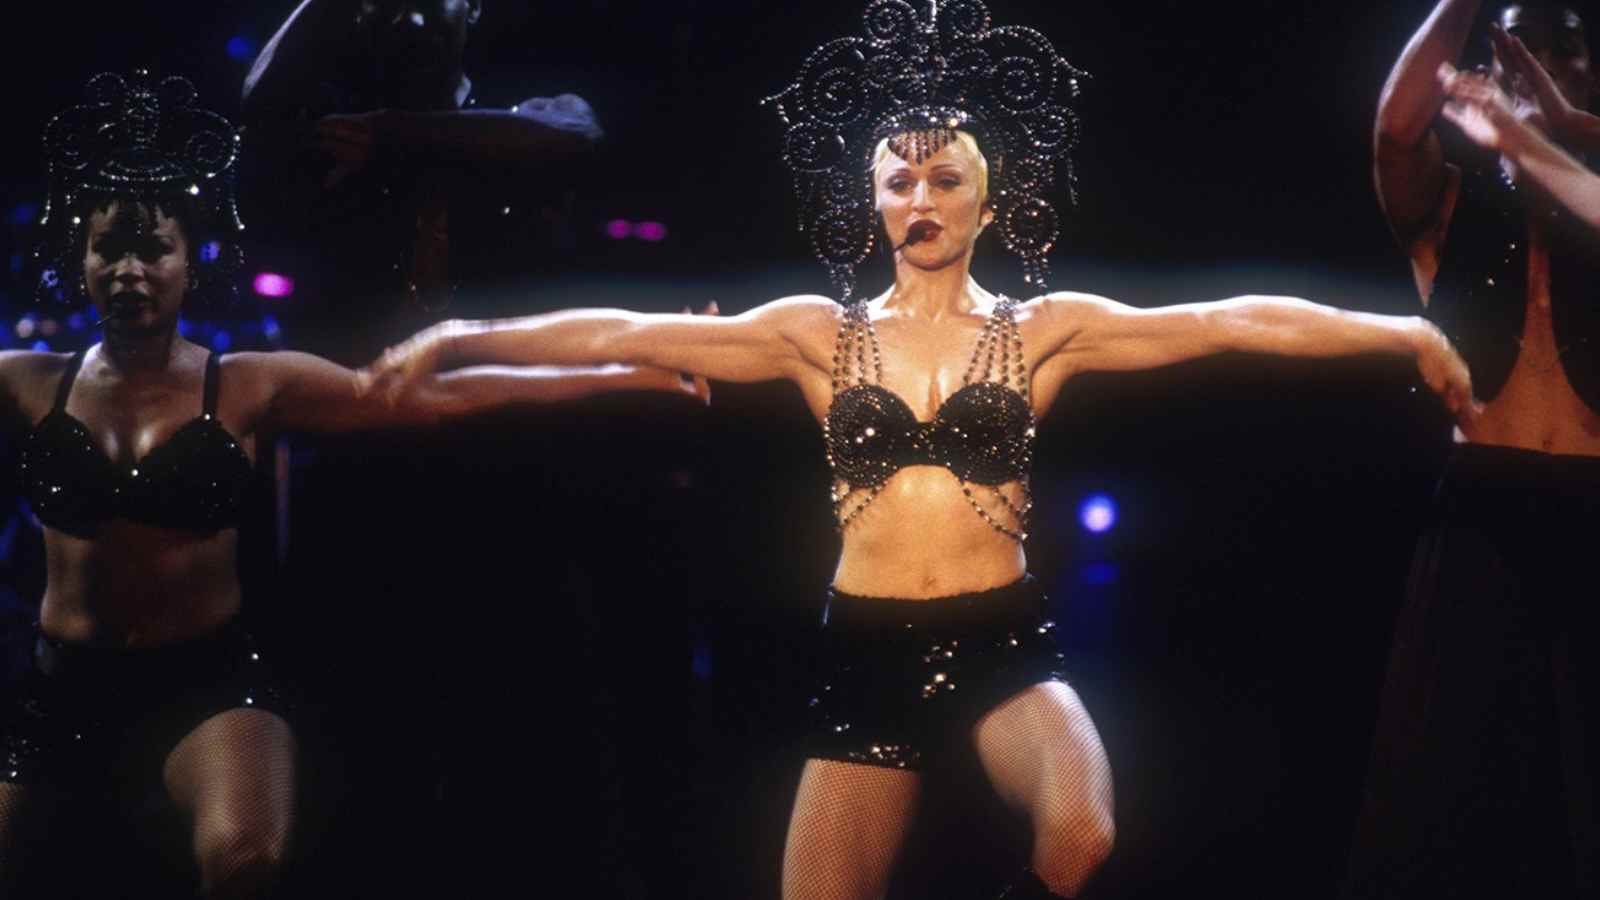 Madonna during her tour